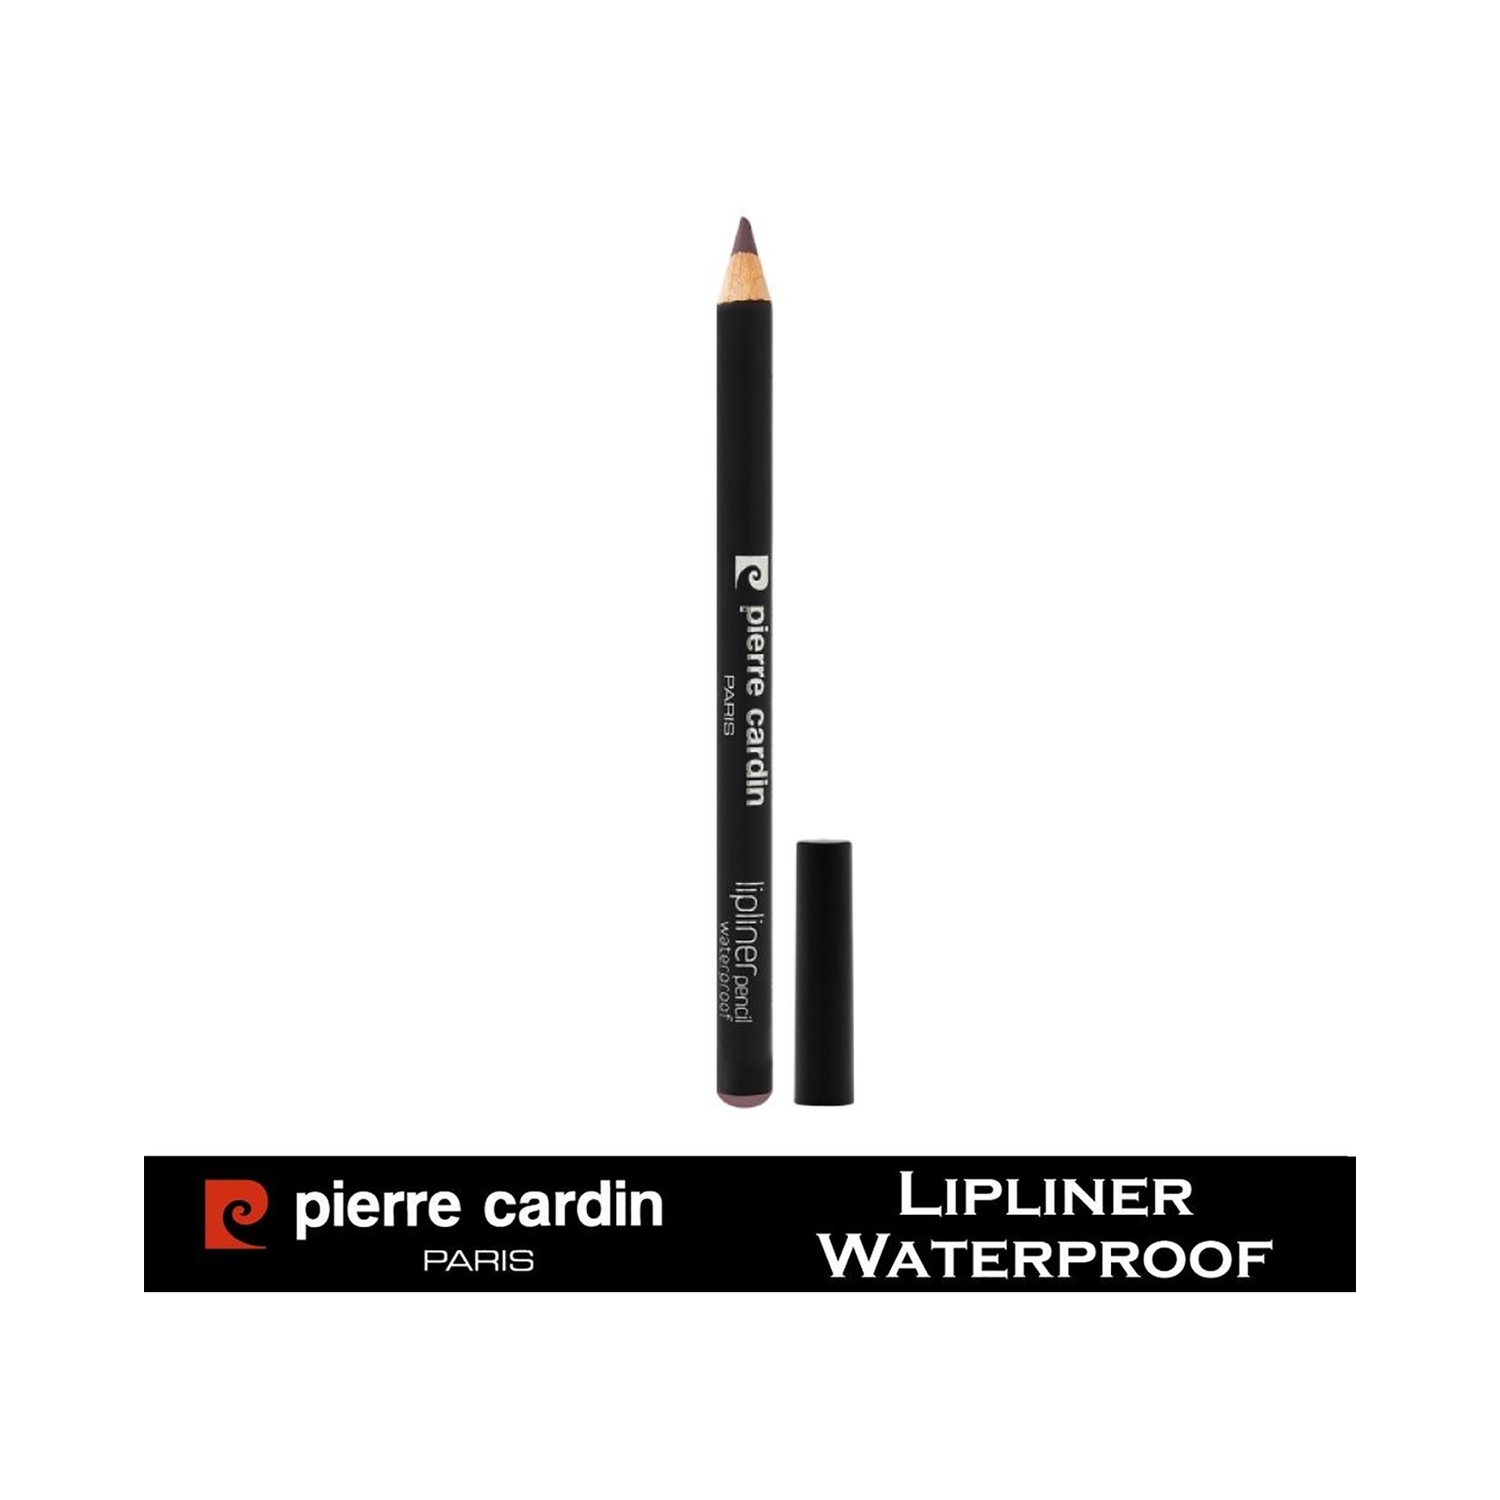 Pierre Cardin Paris | Pierre Cardin Paris Waterproof Lip Liner Pencil - 395 Plummy (0.4g)